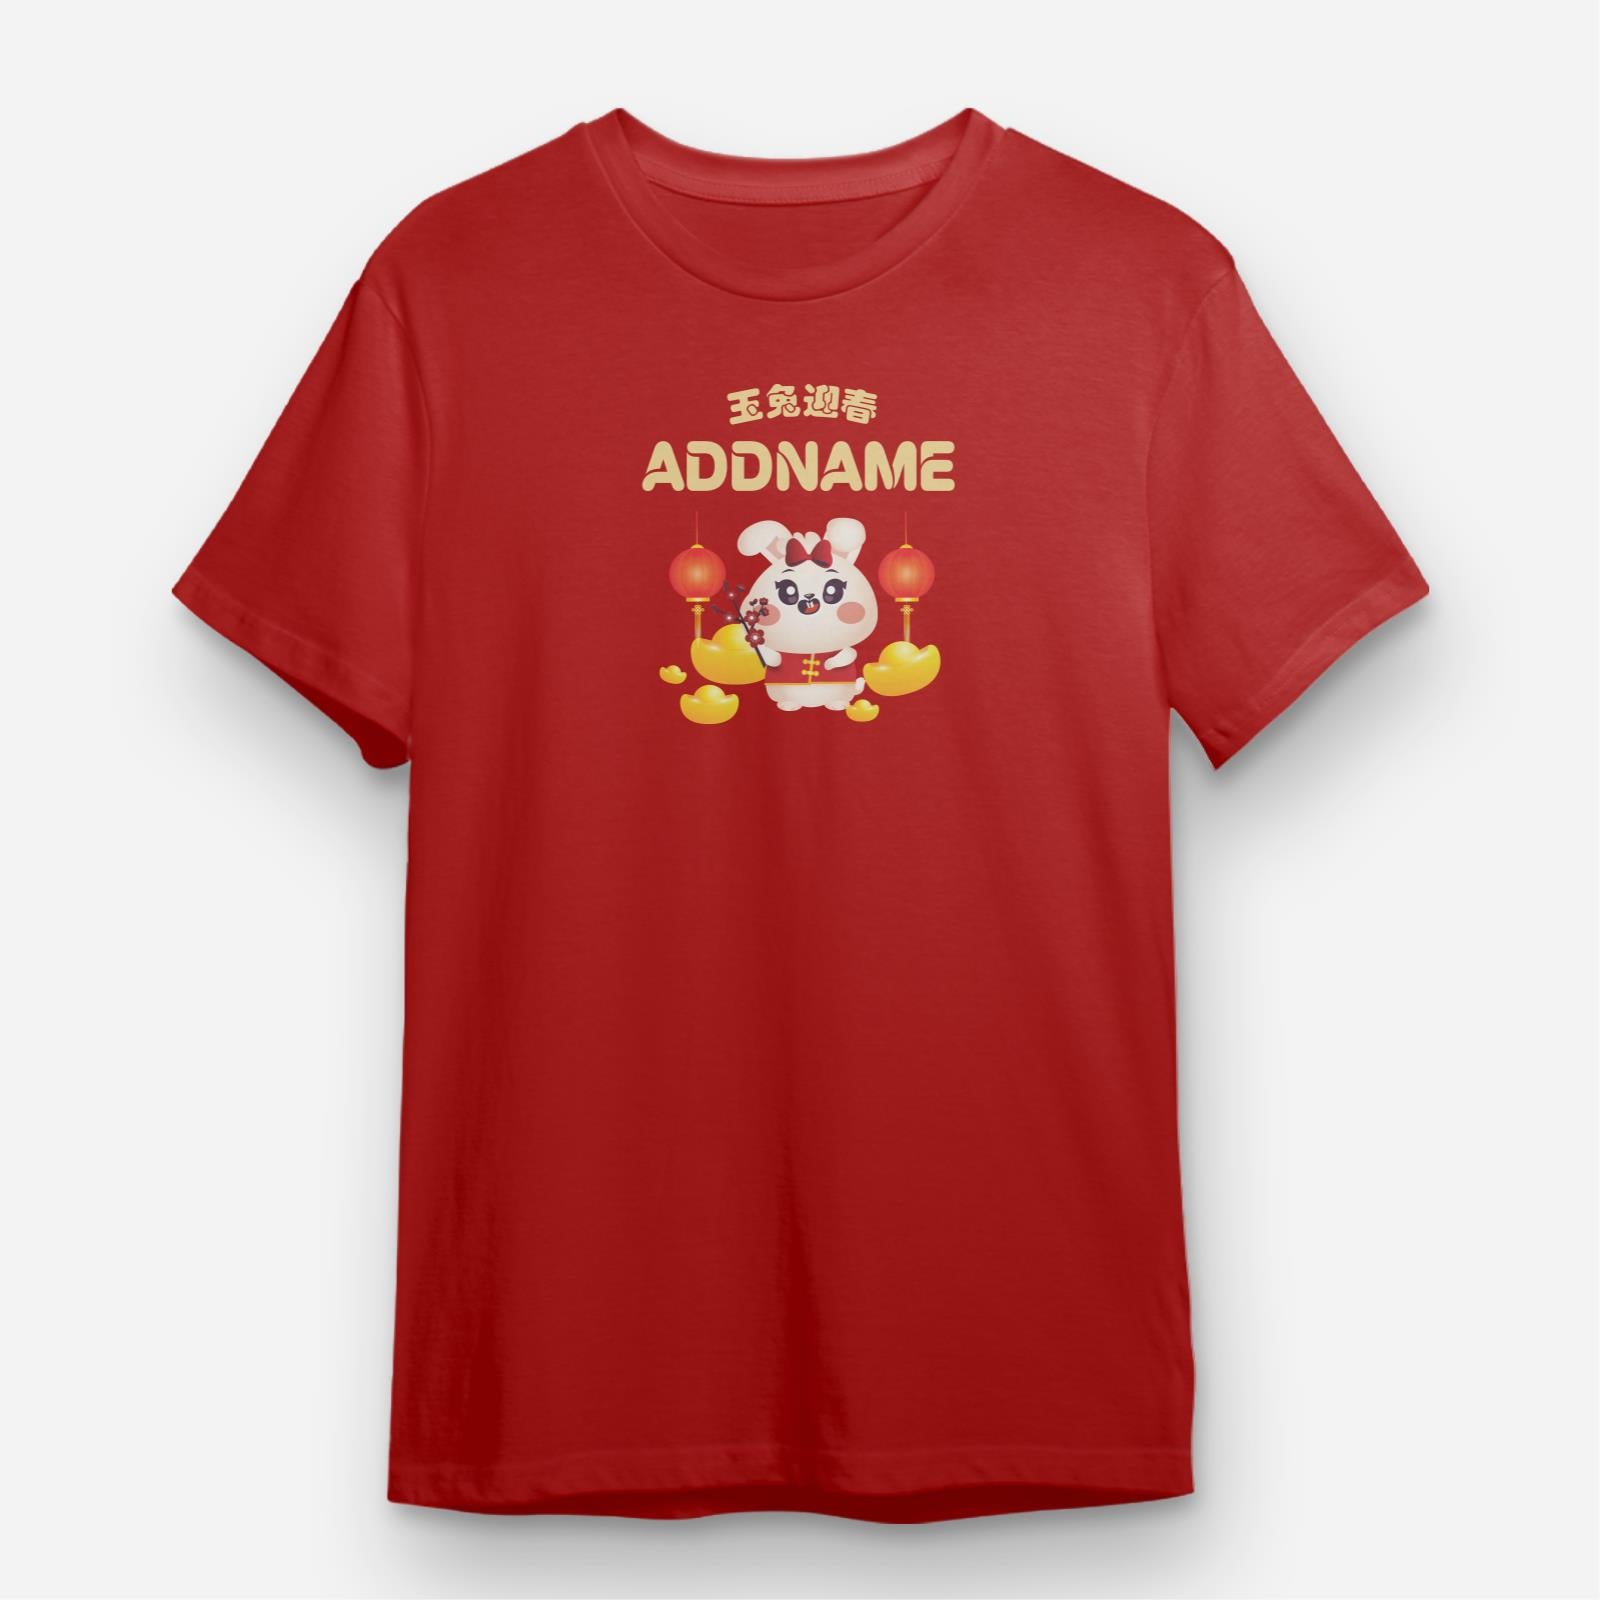 Cny Rabbit Family - Sister Rabbit Unisex Tee Shirt with English Personalization